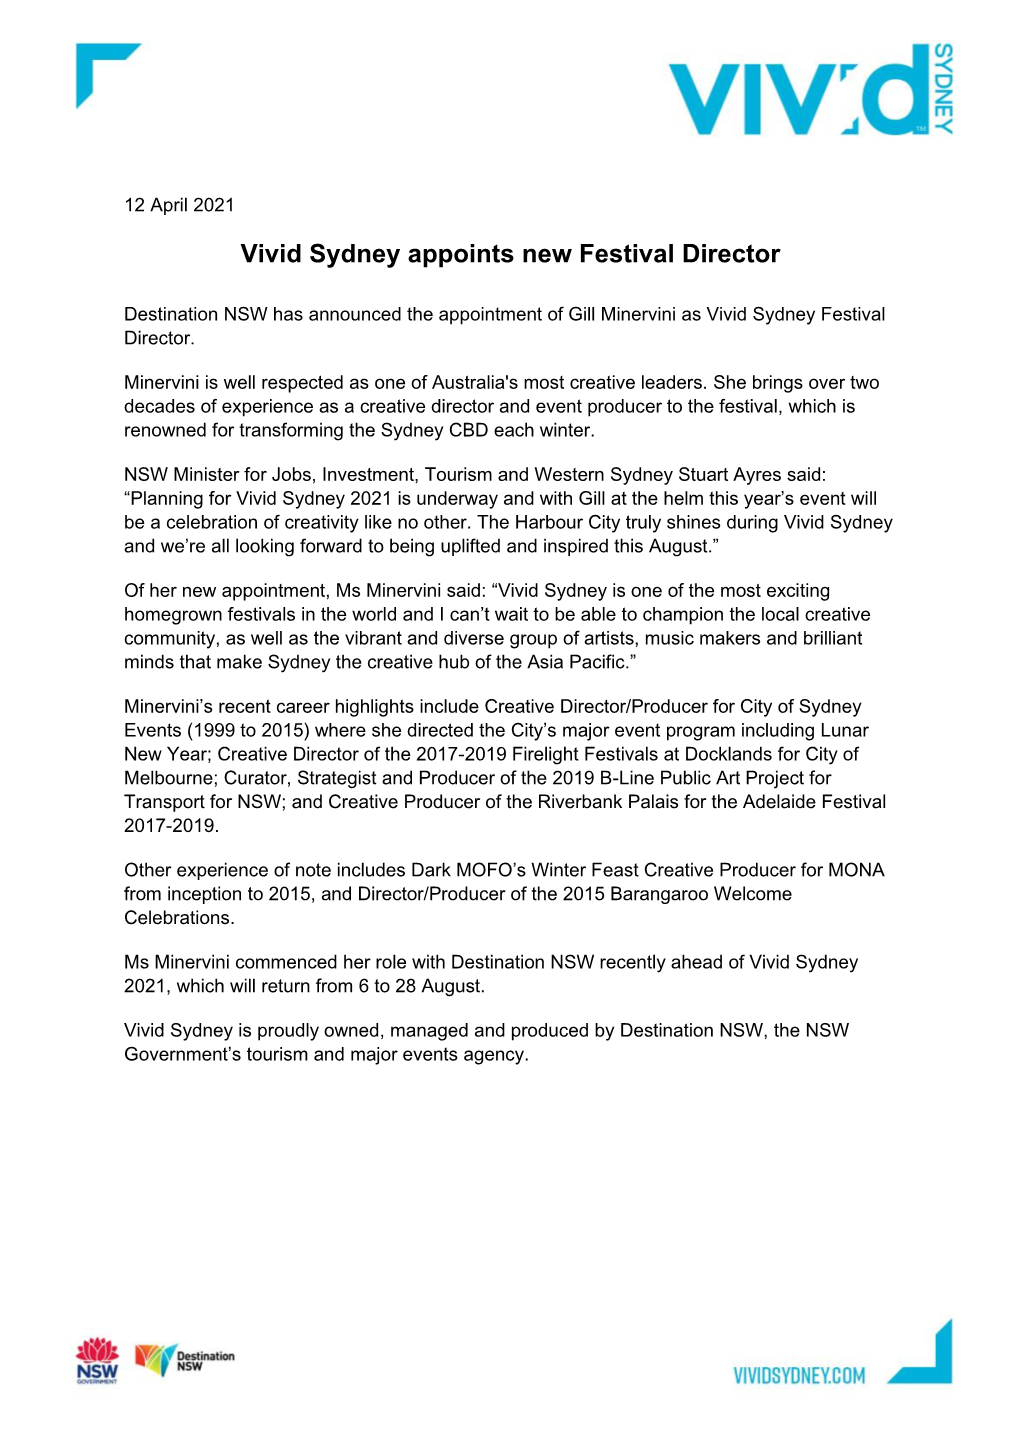 Vivid Sydney Appoints New Festival Director